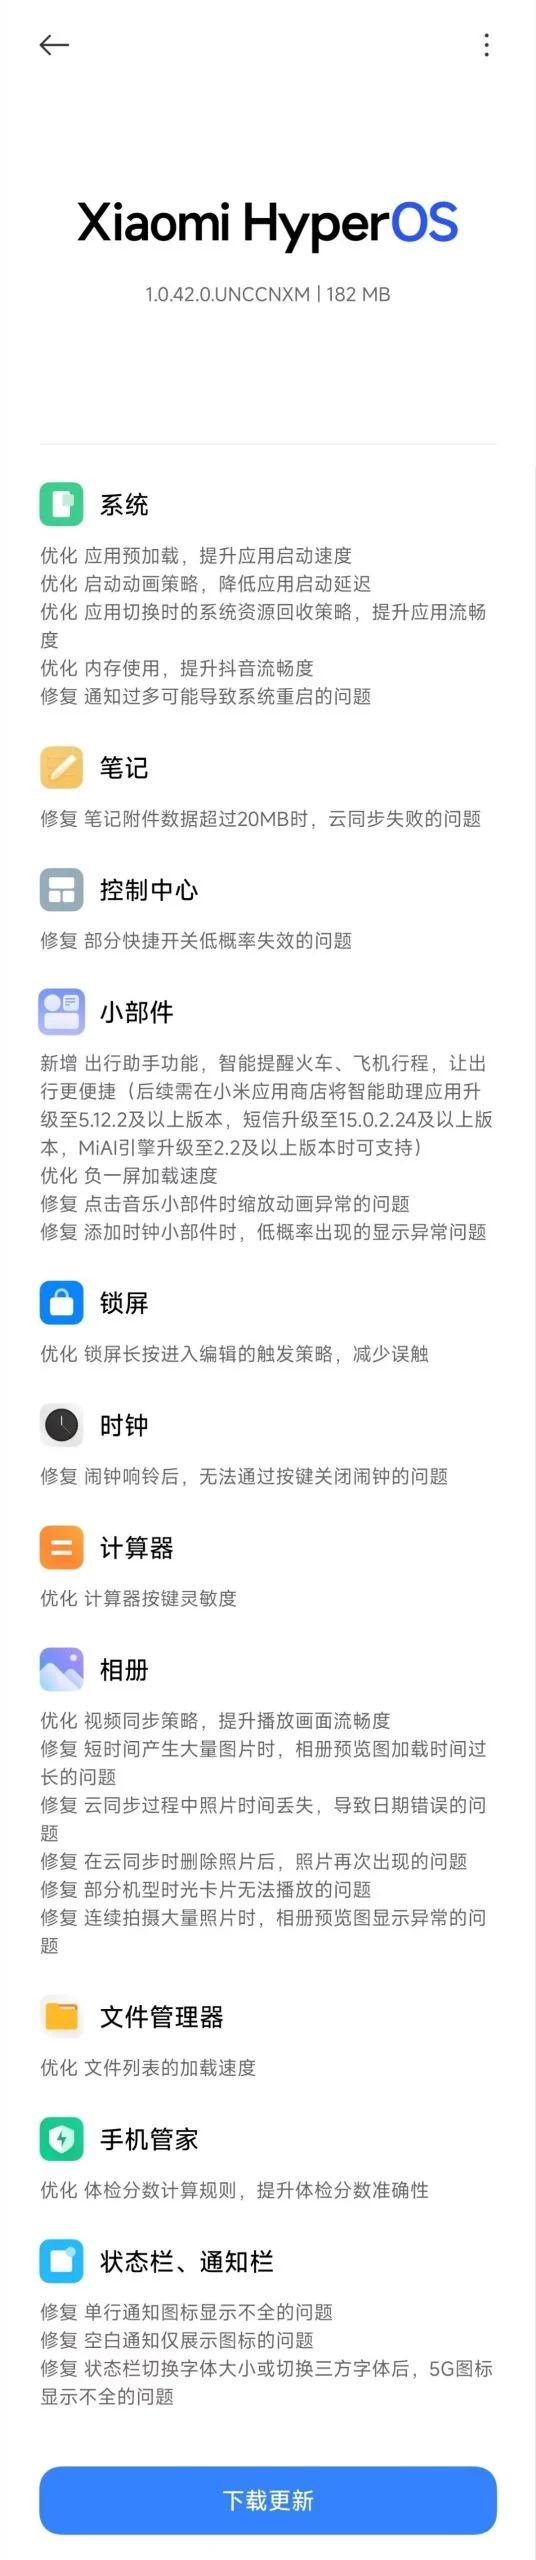 (Afbeeldingsbron: Xiaomi via Gizmochina)